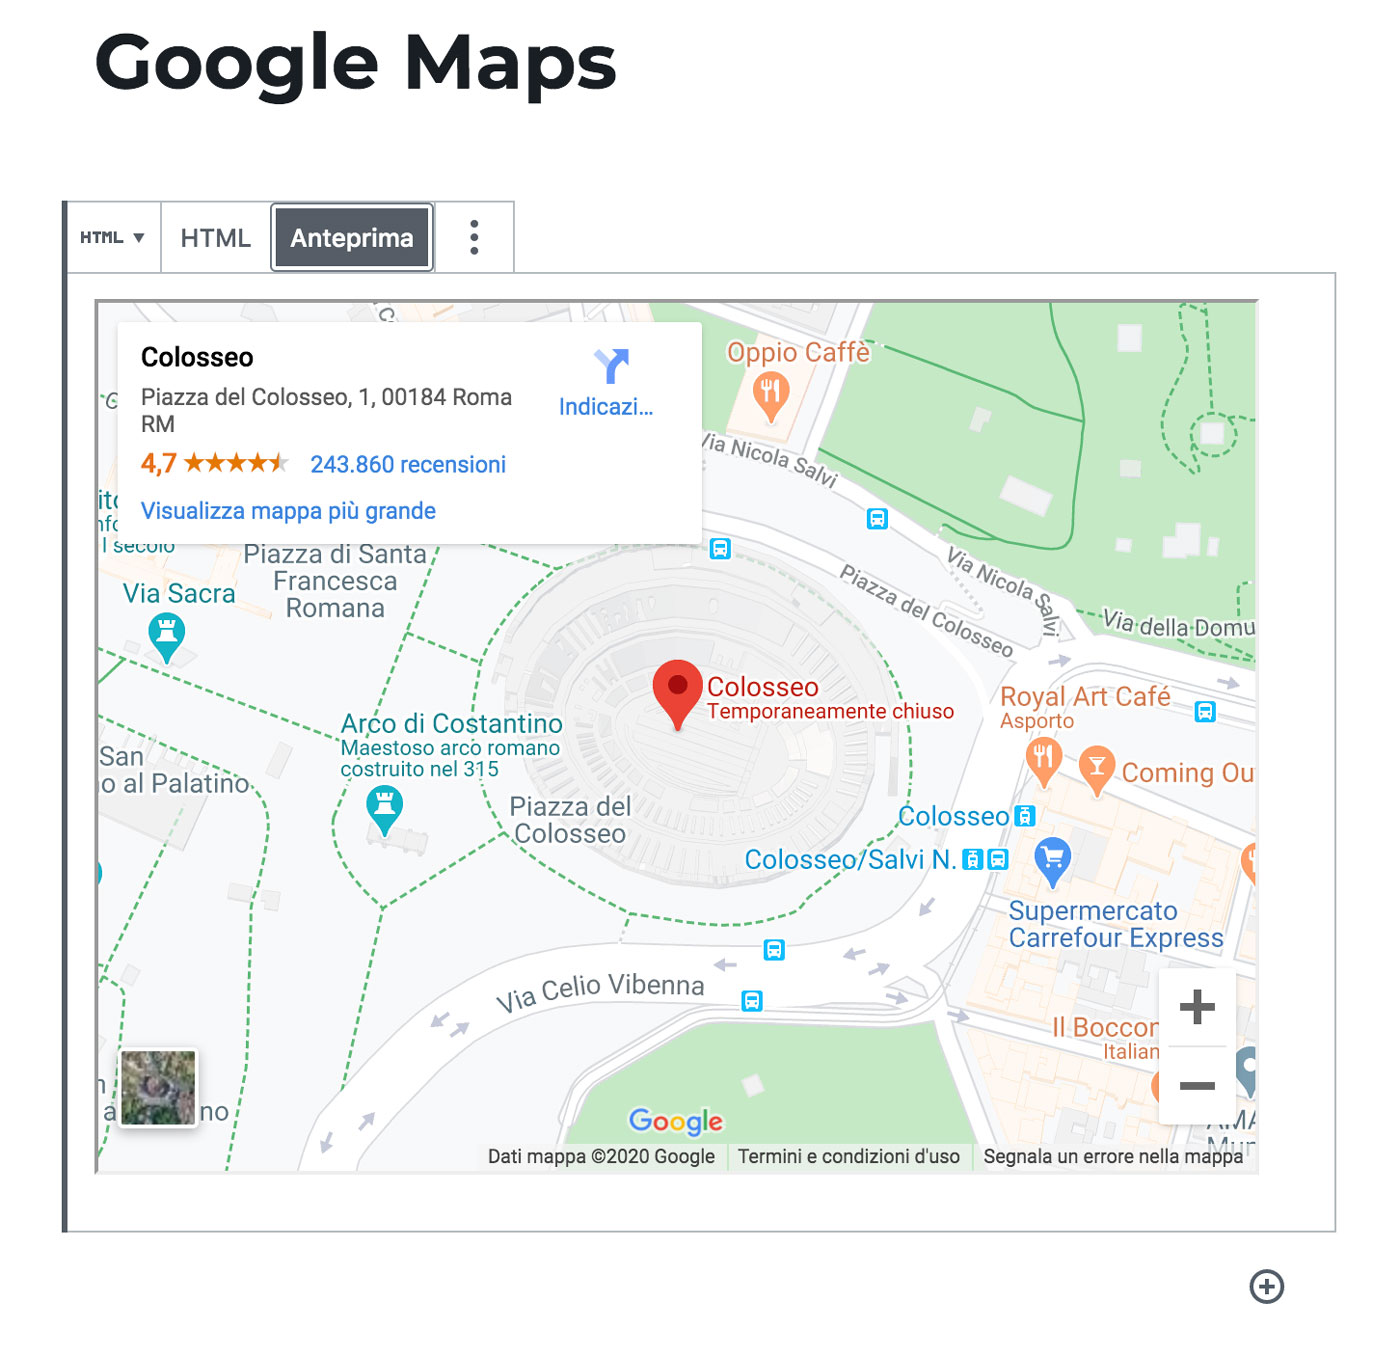 integrare una mappa google su wordpress